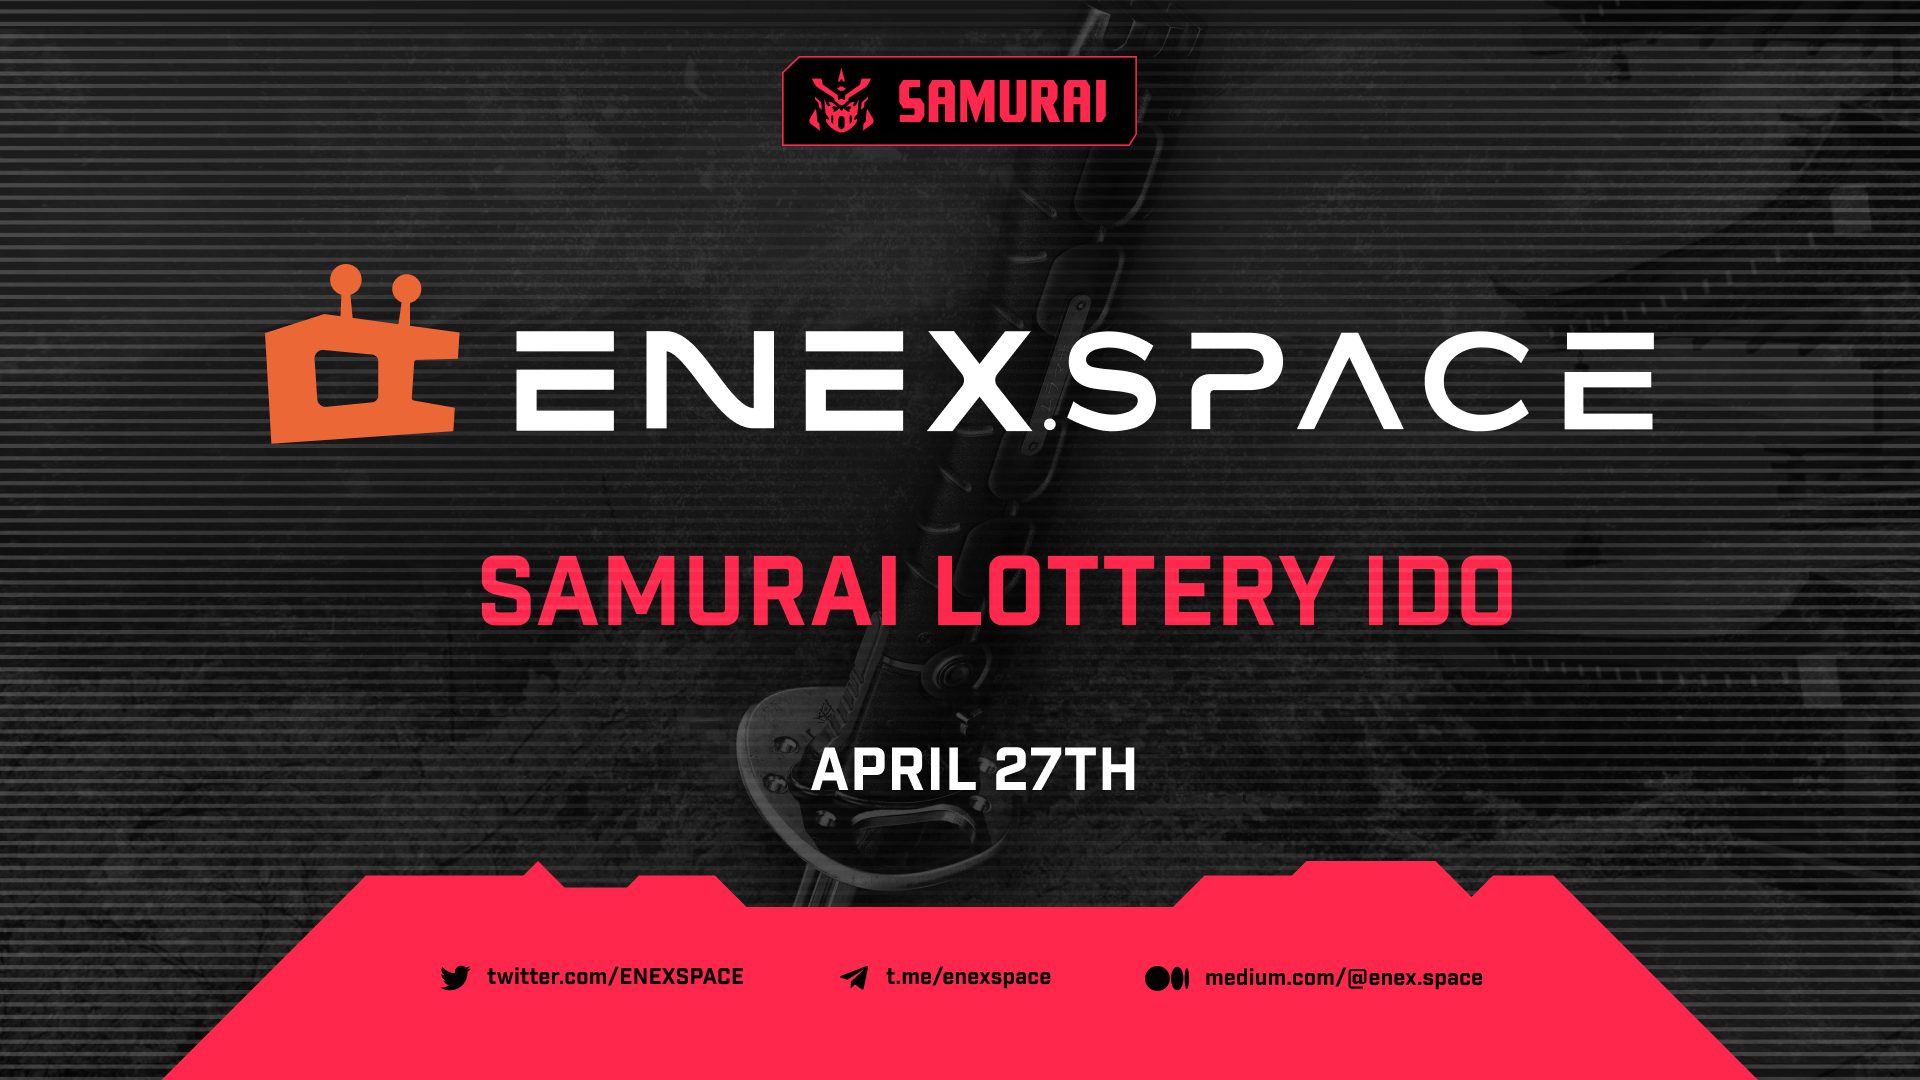 Samurai Launchpad IDO: Enex Space